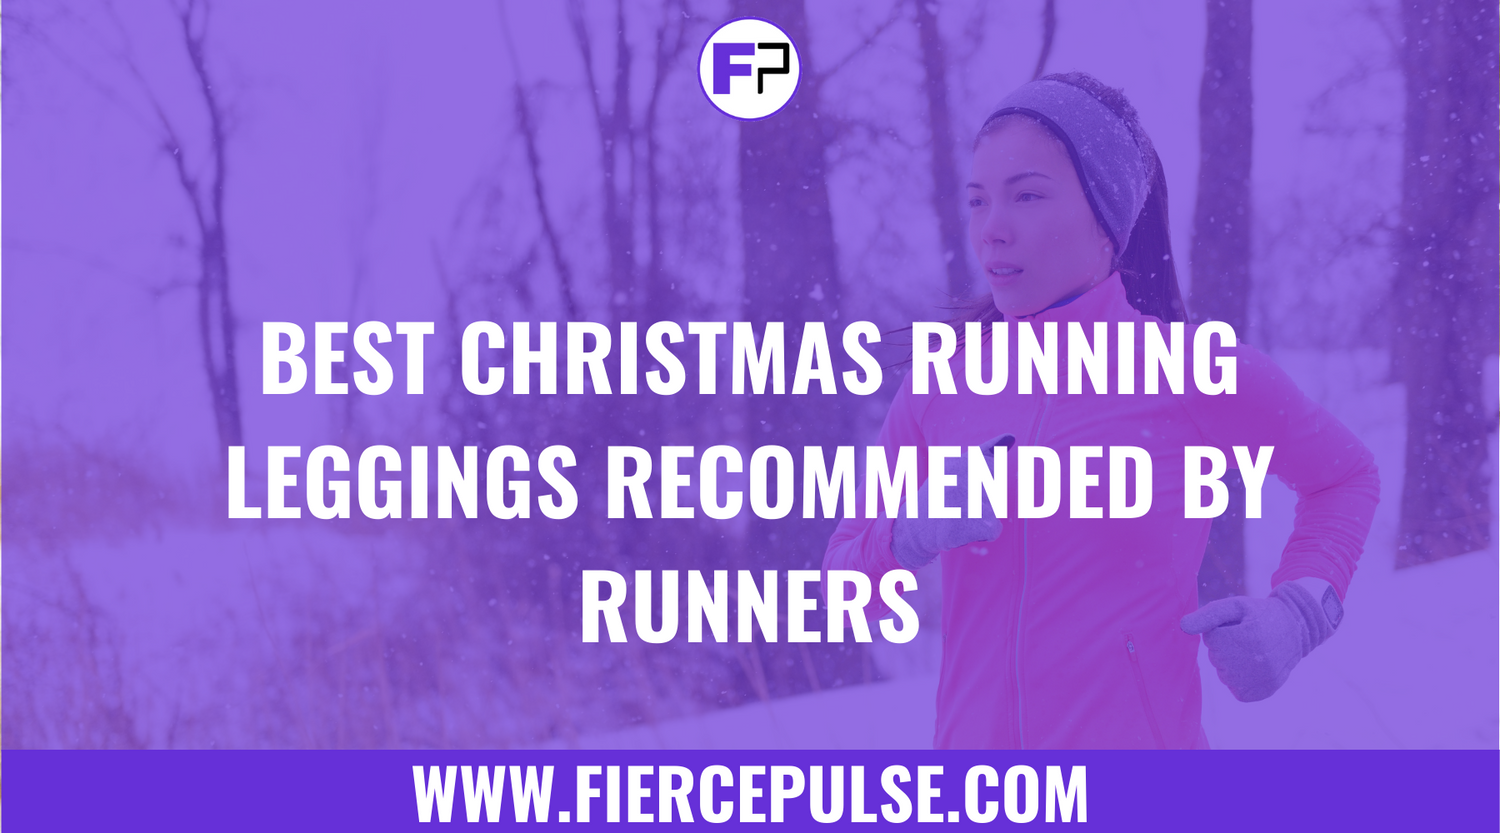 Best Christmas Running Leggings Recommended by Runners